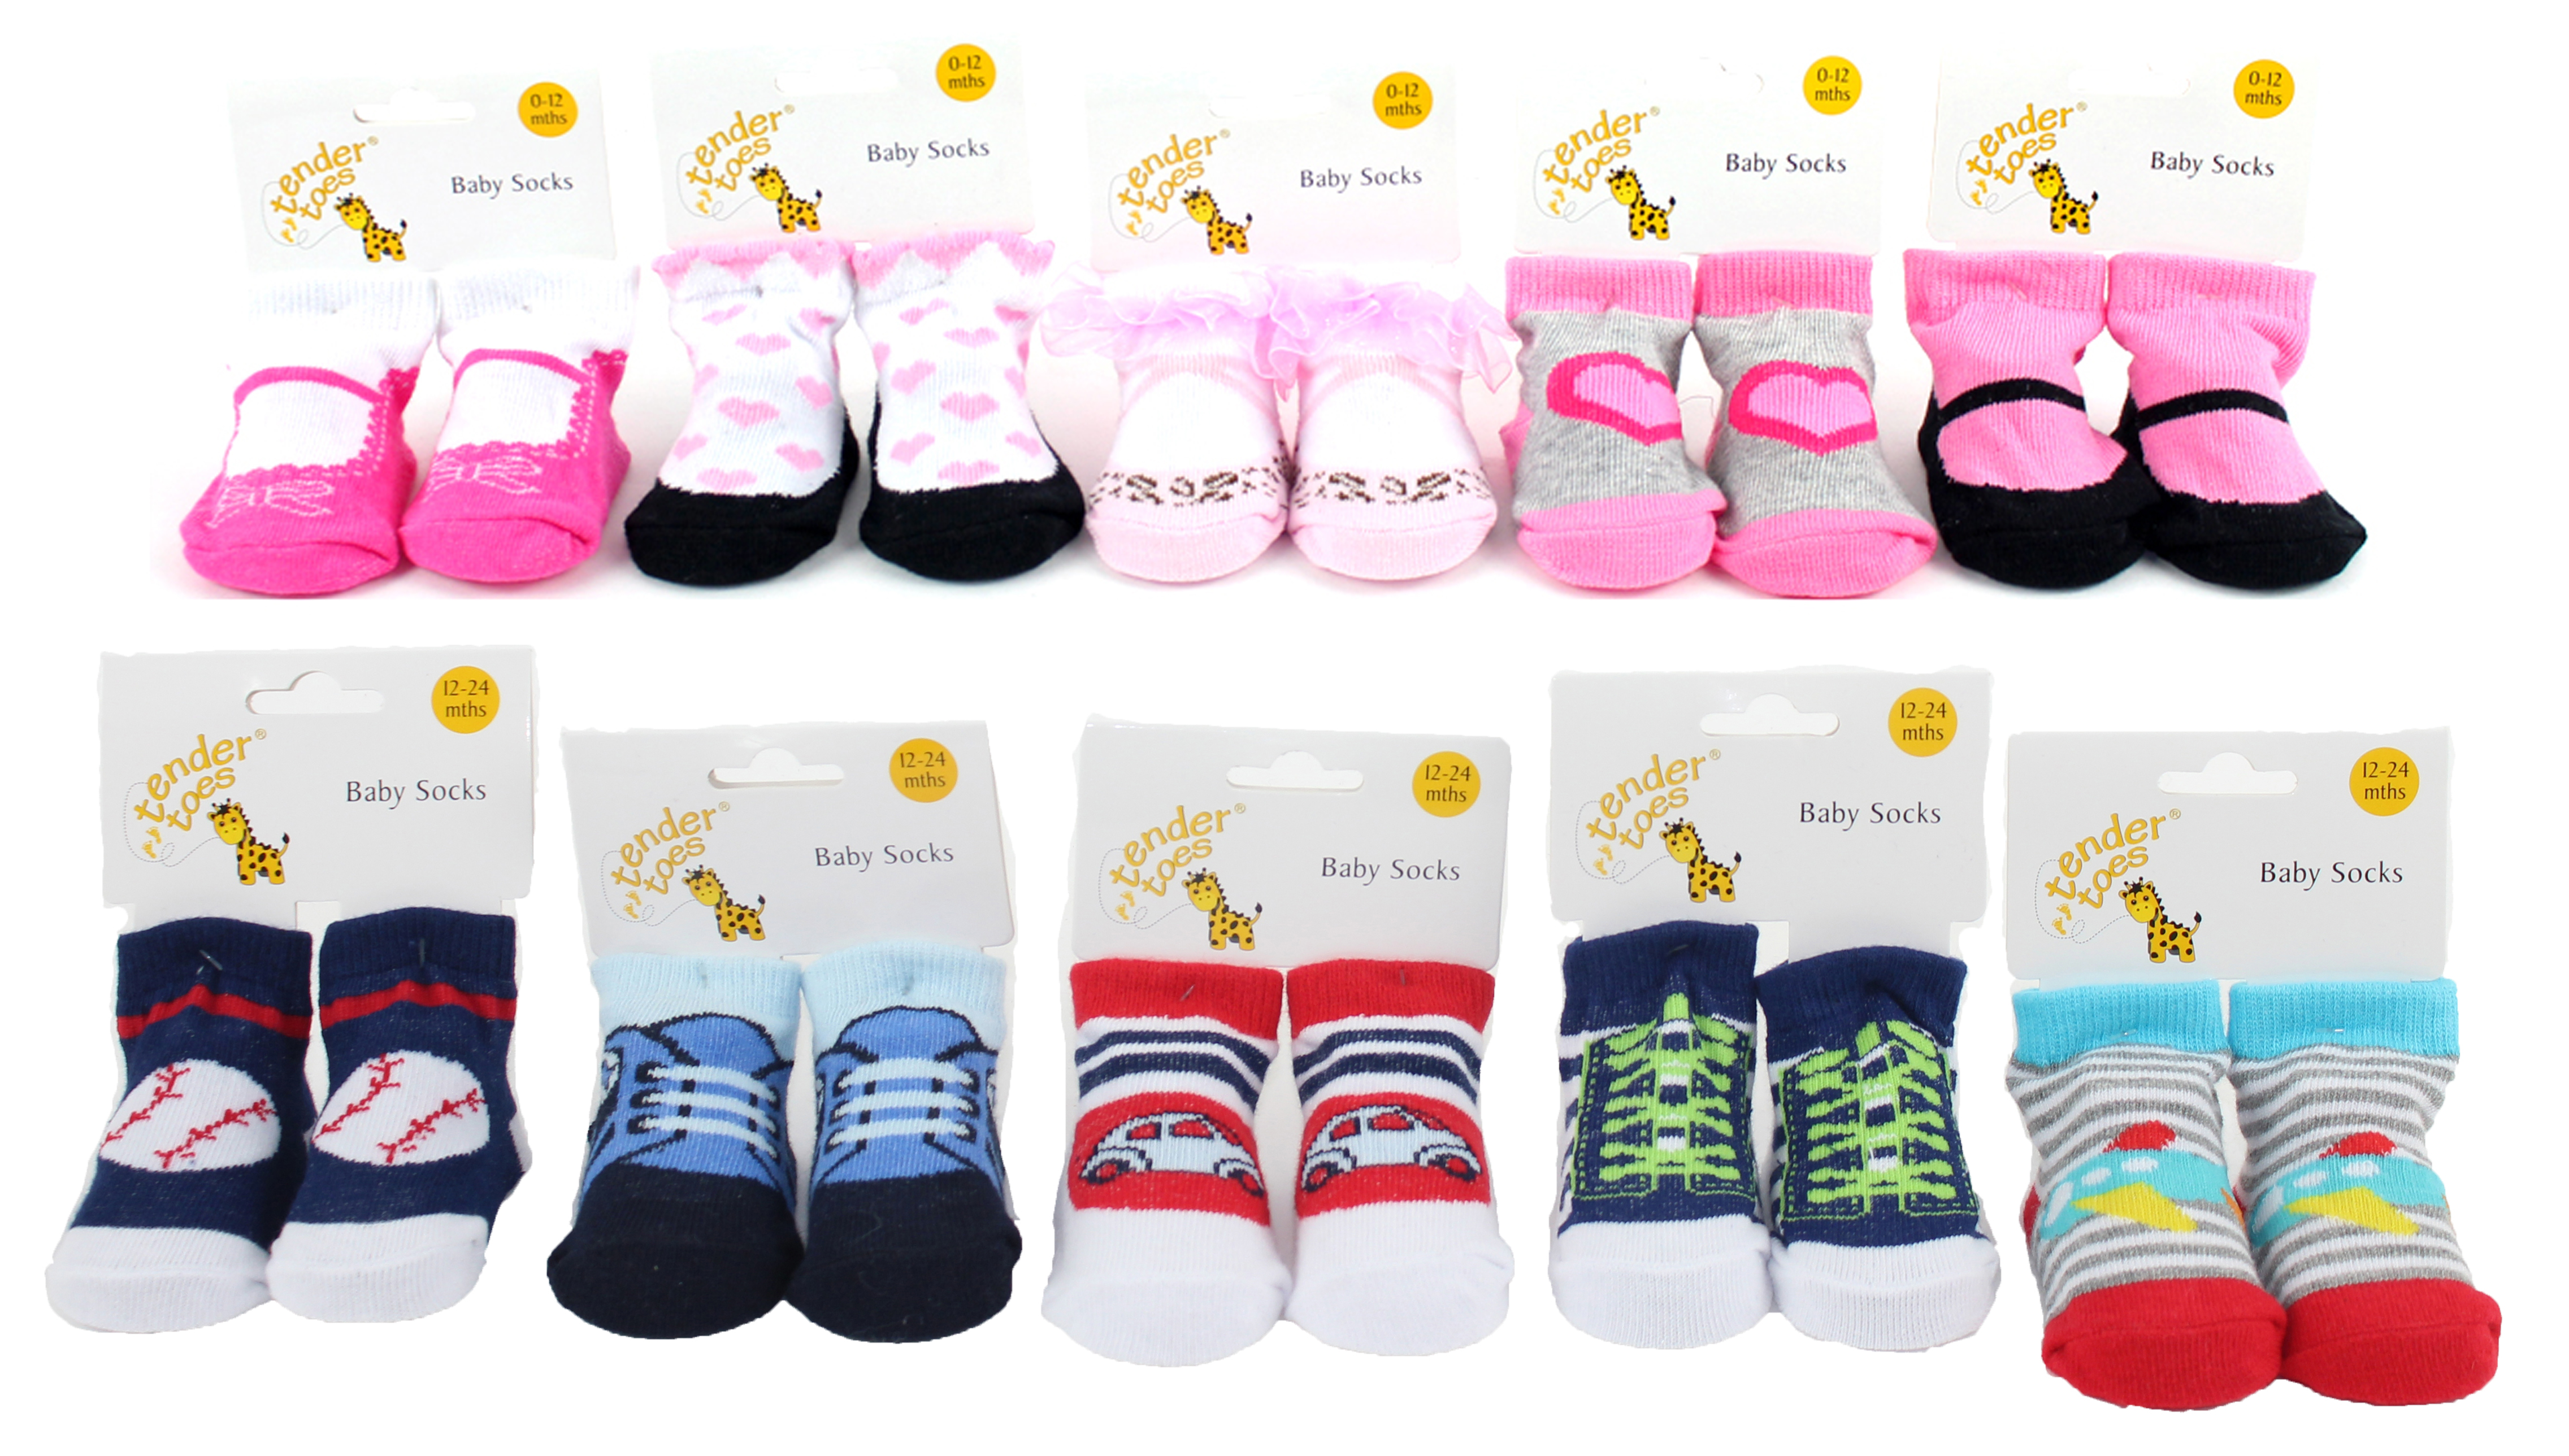 Baby Socks Newborn Blue & White/Multi Pink Soft Touch Wholesale Bulk 100 Units 